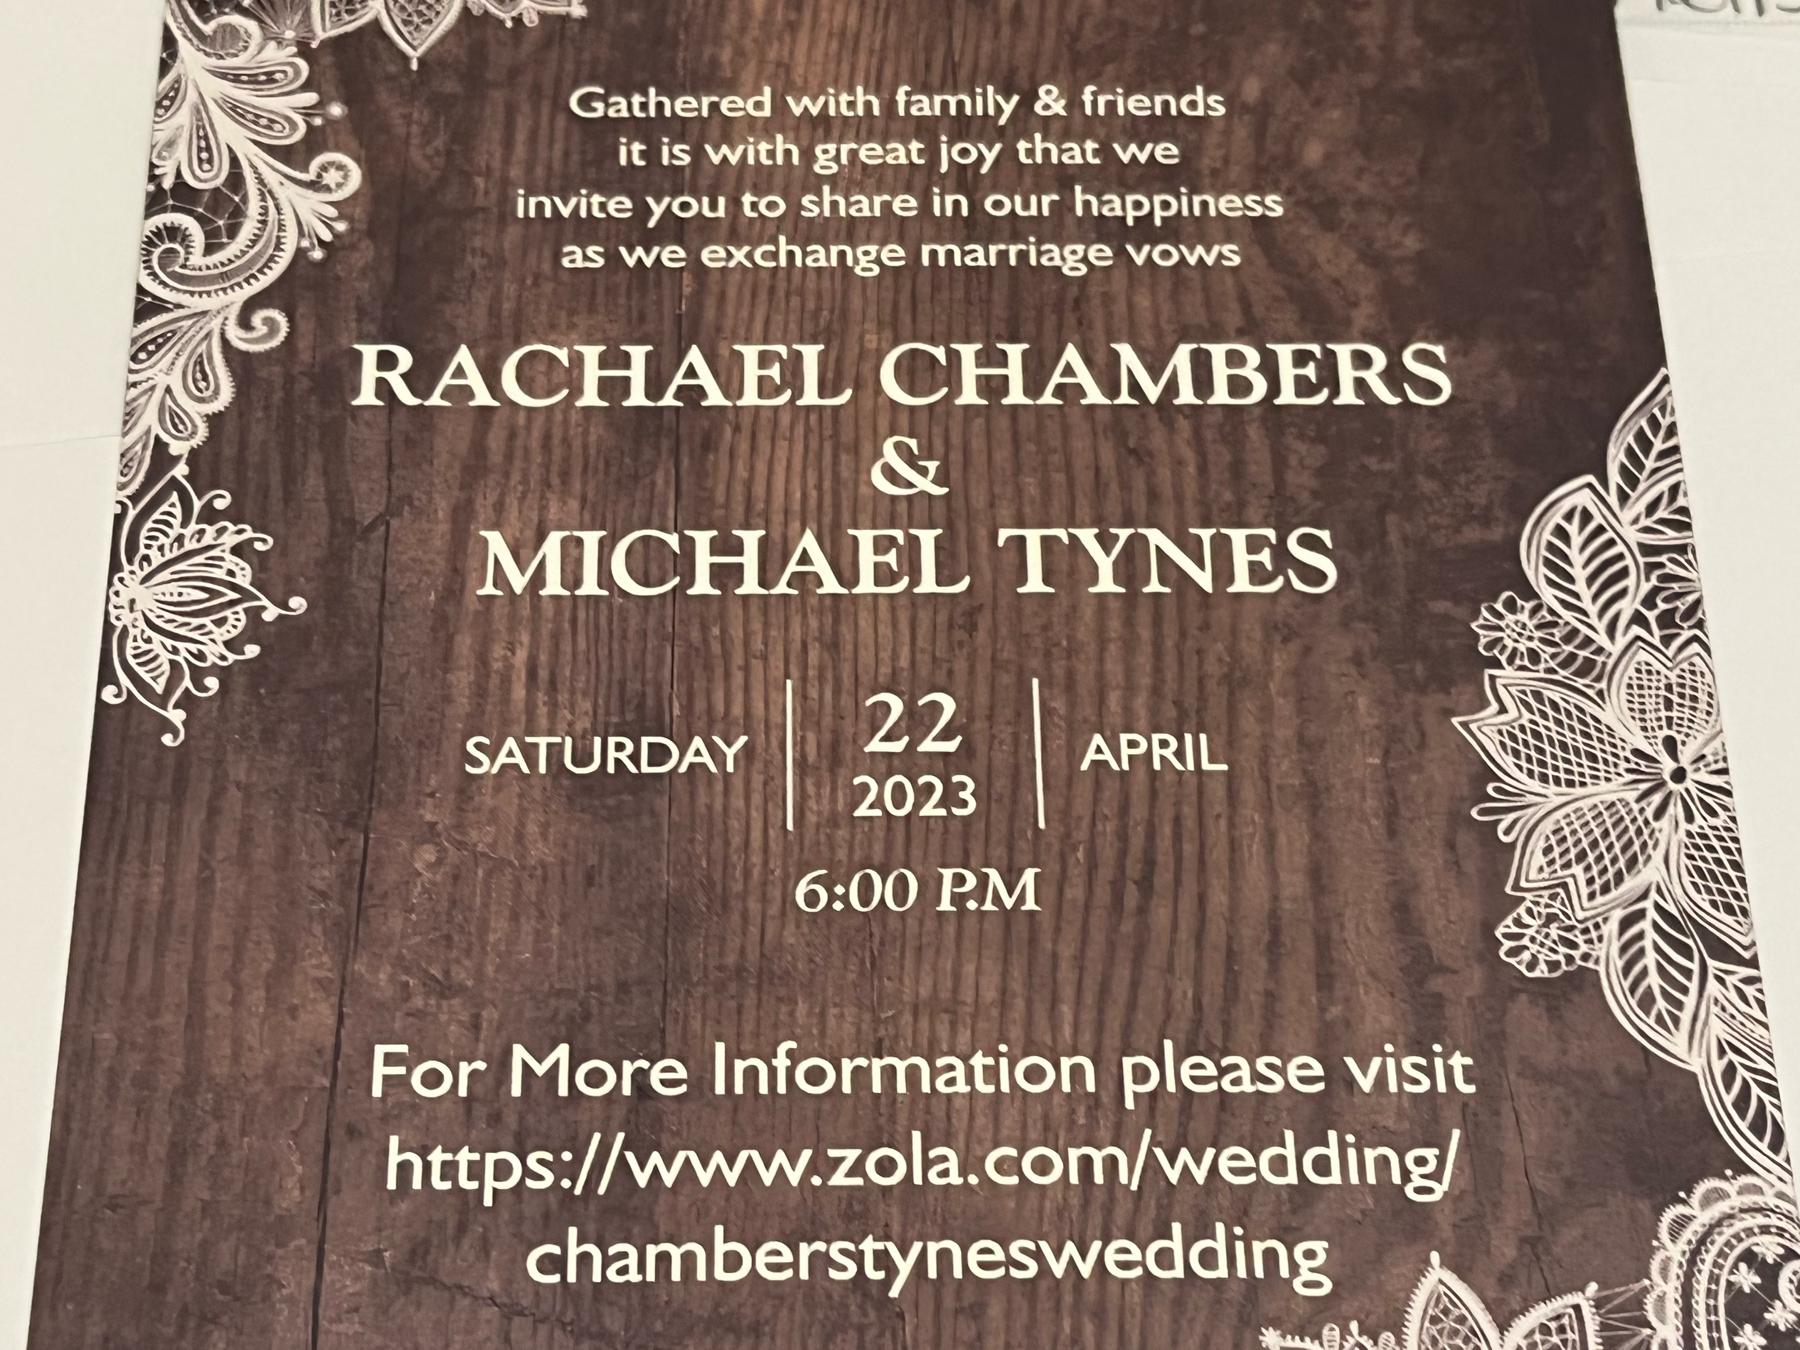 The Wedding Website of Rachael Chambers and Michael Tynes